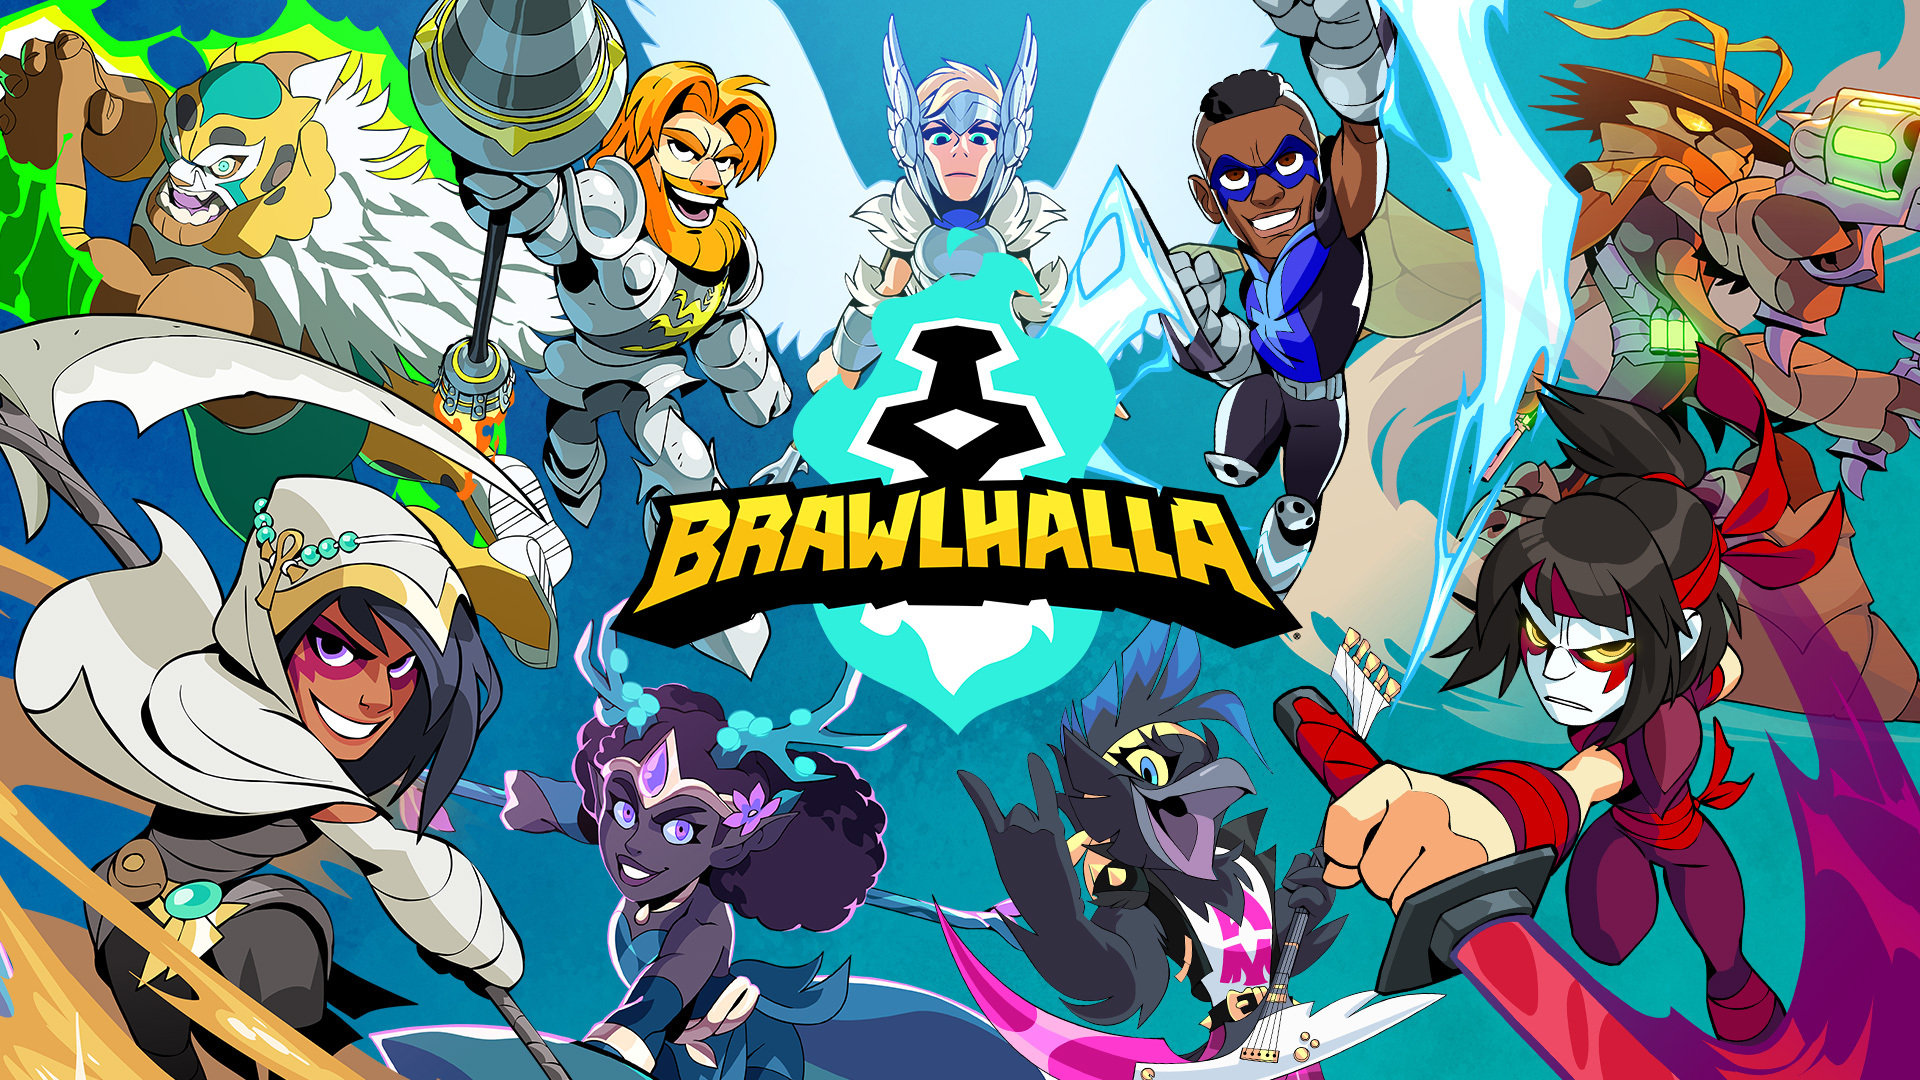 New Legend, Volleybrawl, Boomerang, and More! · Brawlhalla update